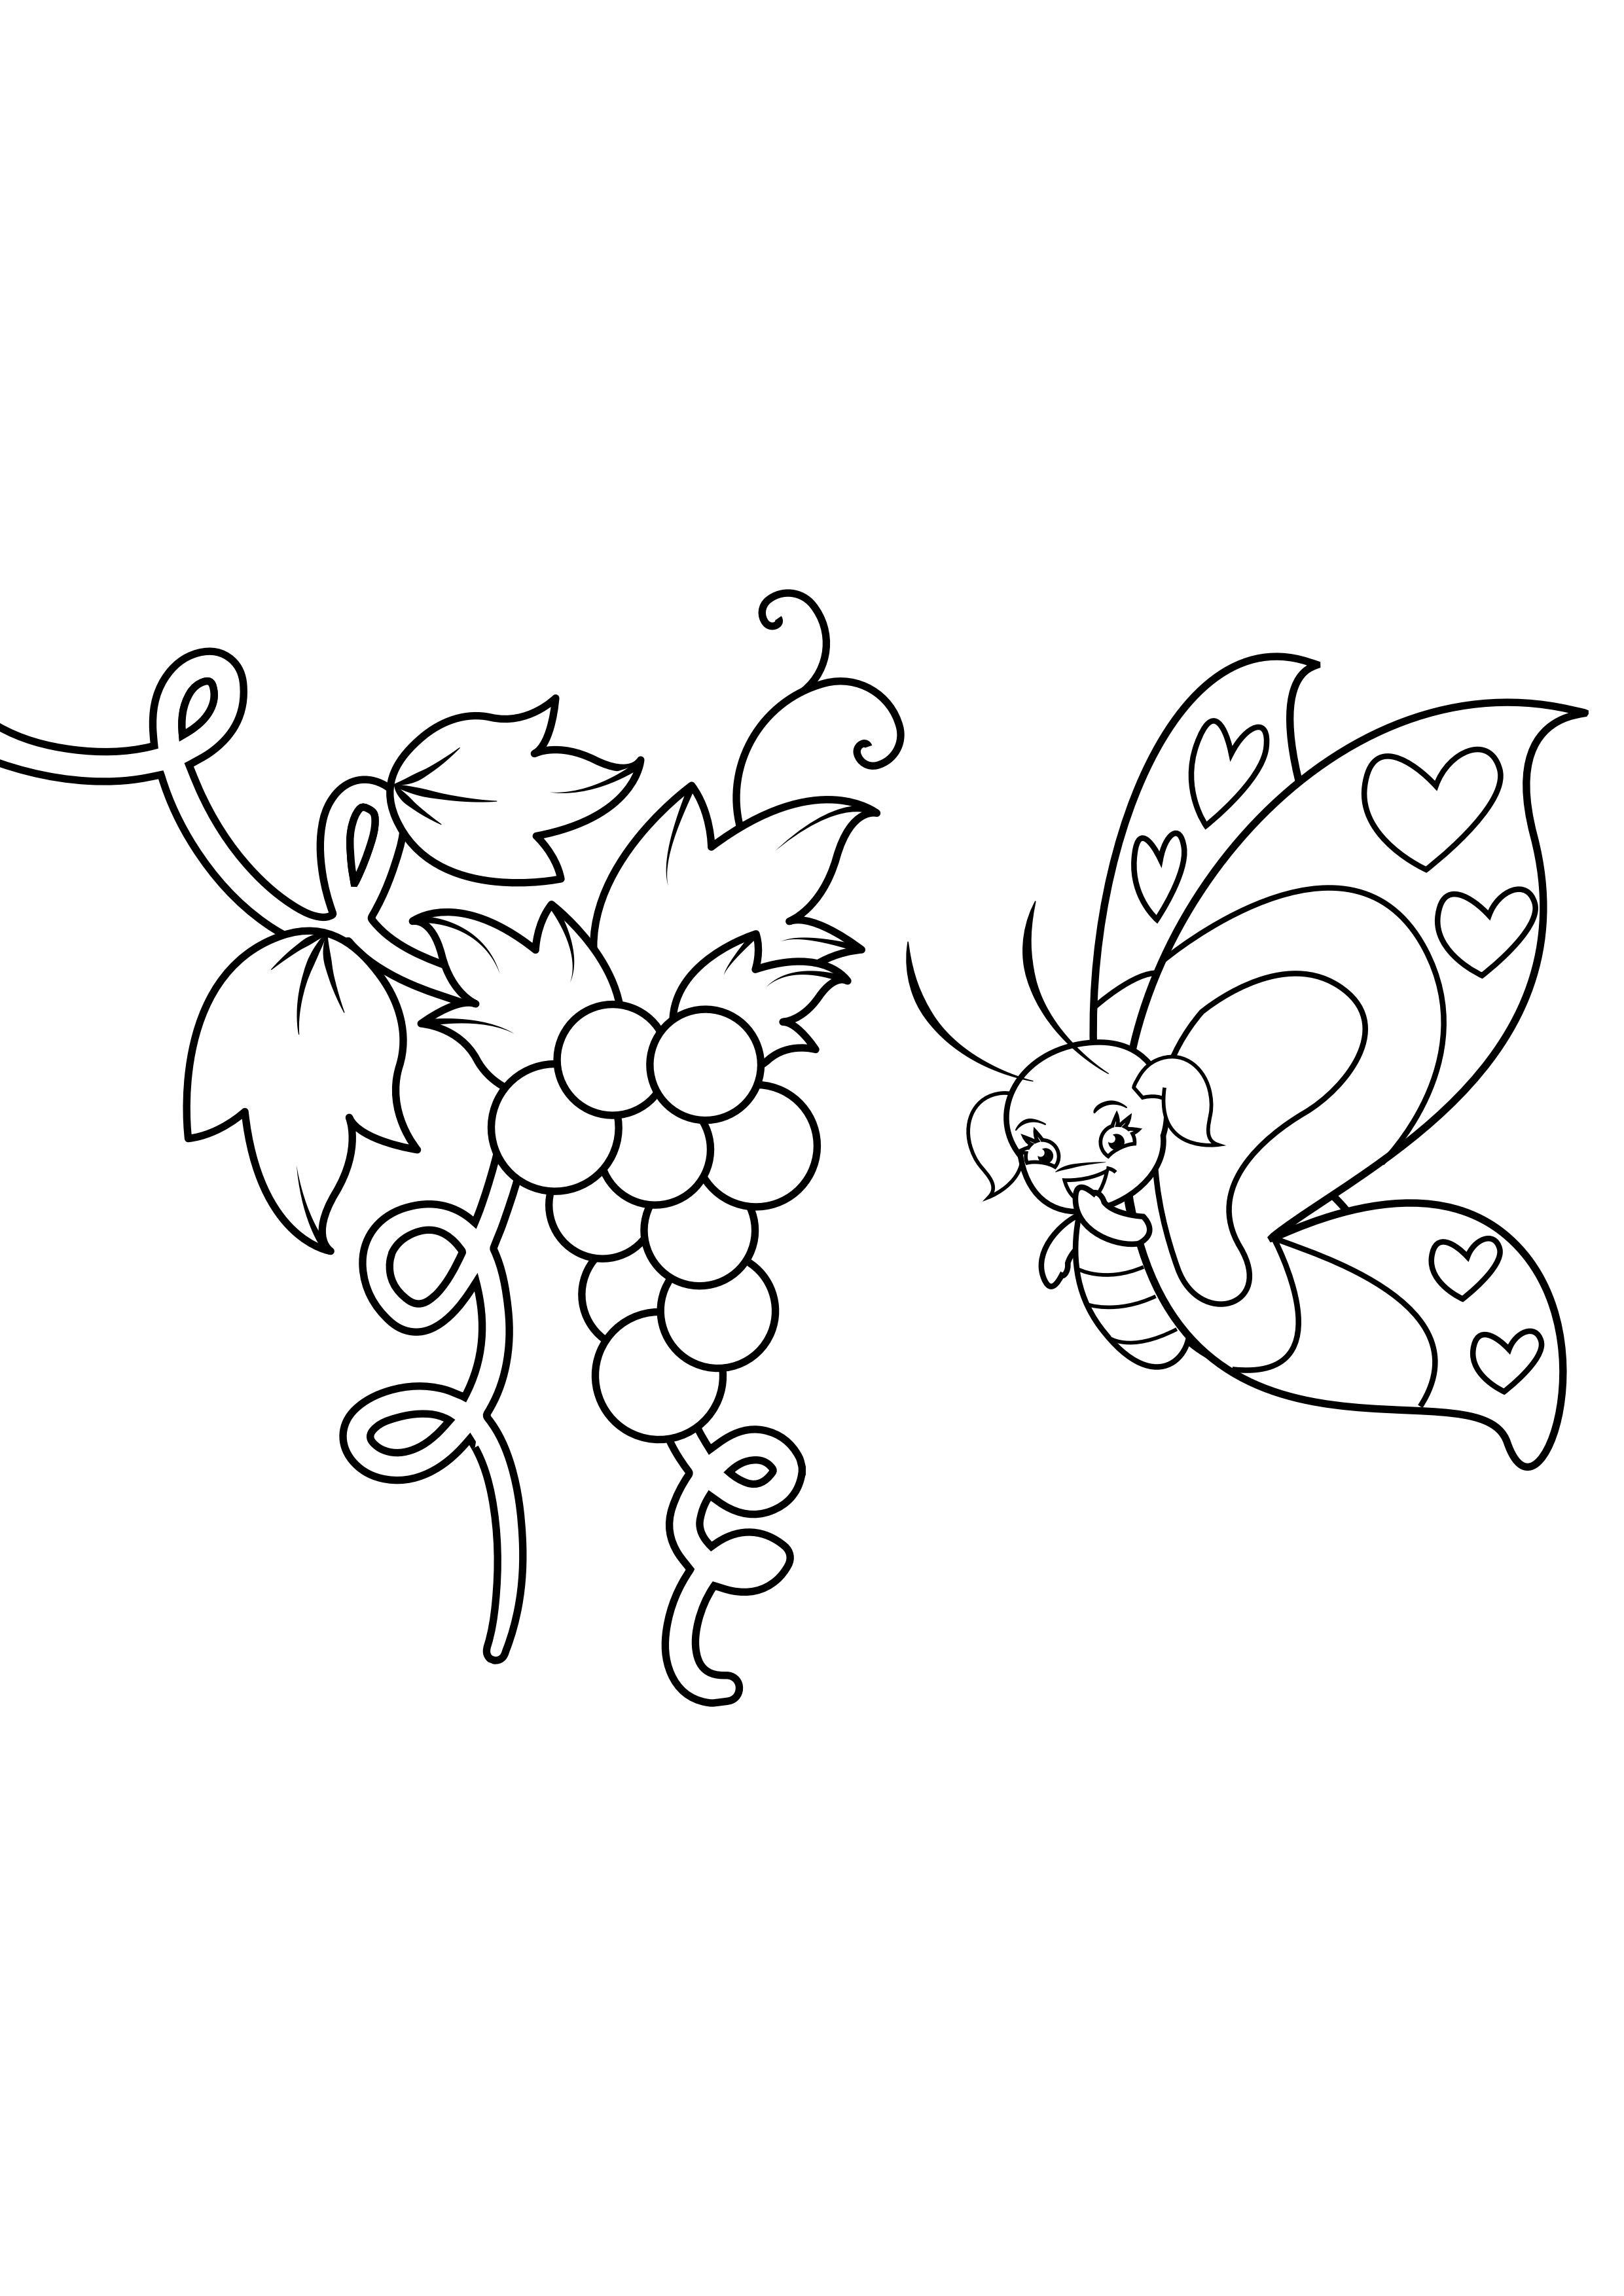 Dibujo para colorear mariposa en uvas